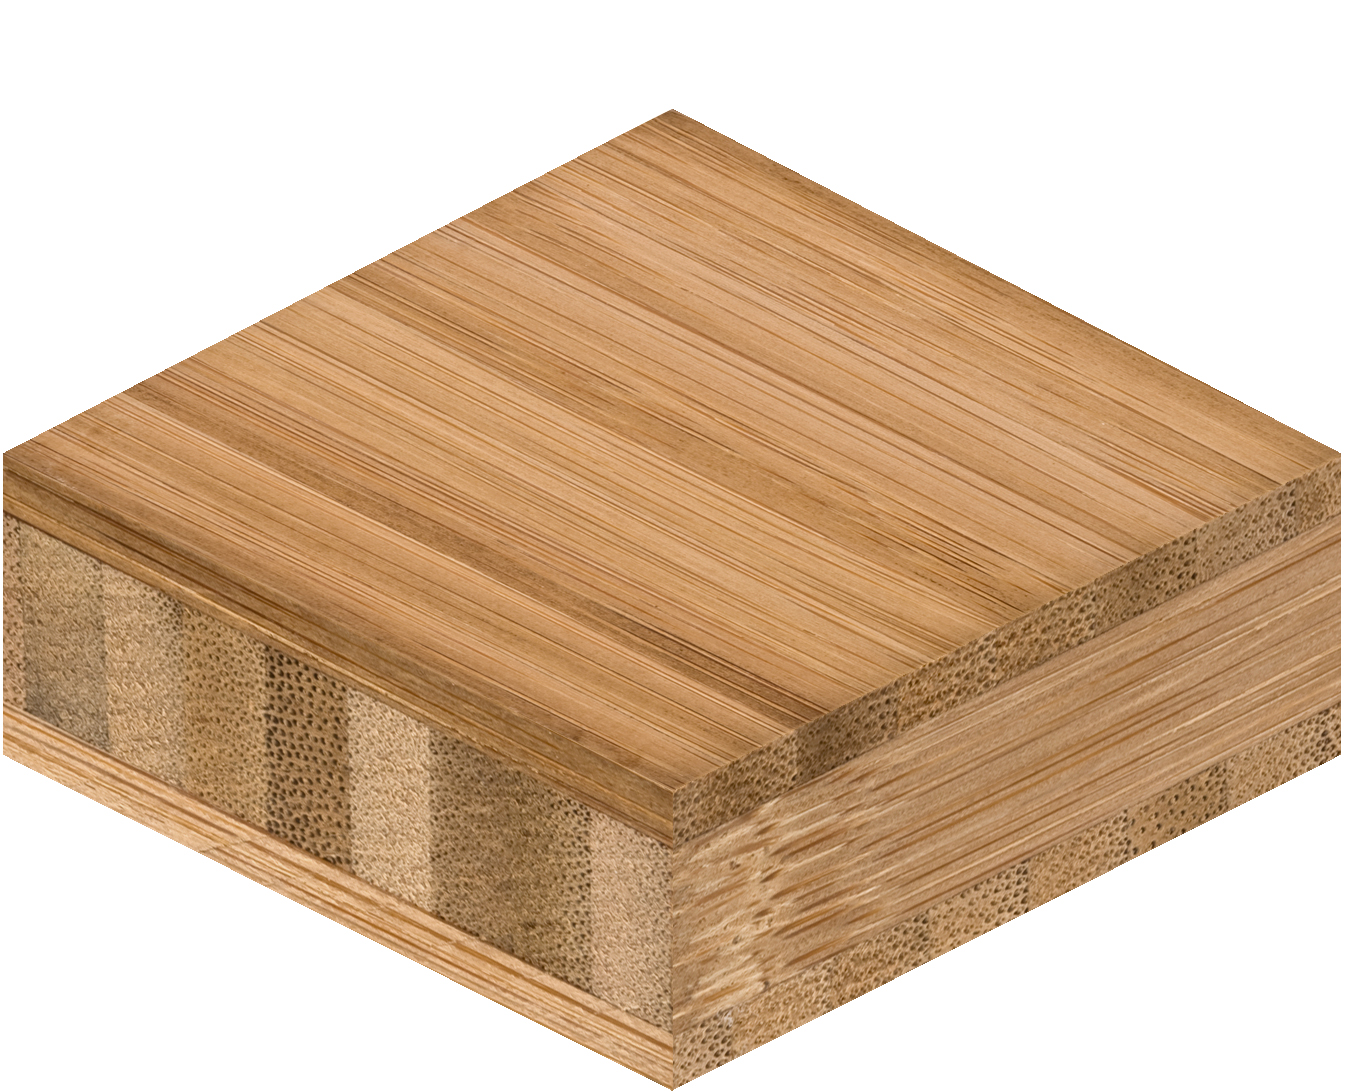 Edge Grain Bamboo Plywood | Smith Fong Bamboo